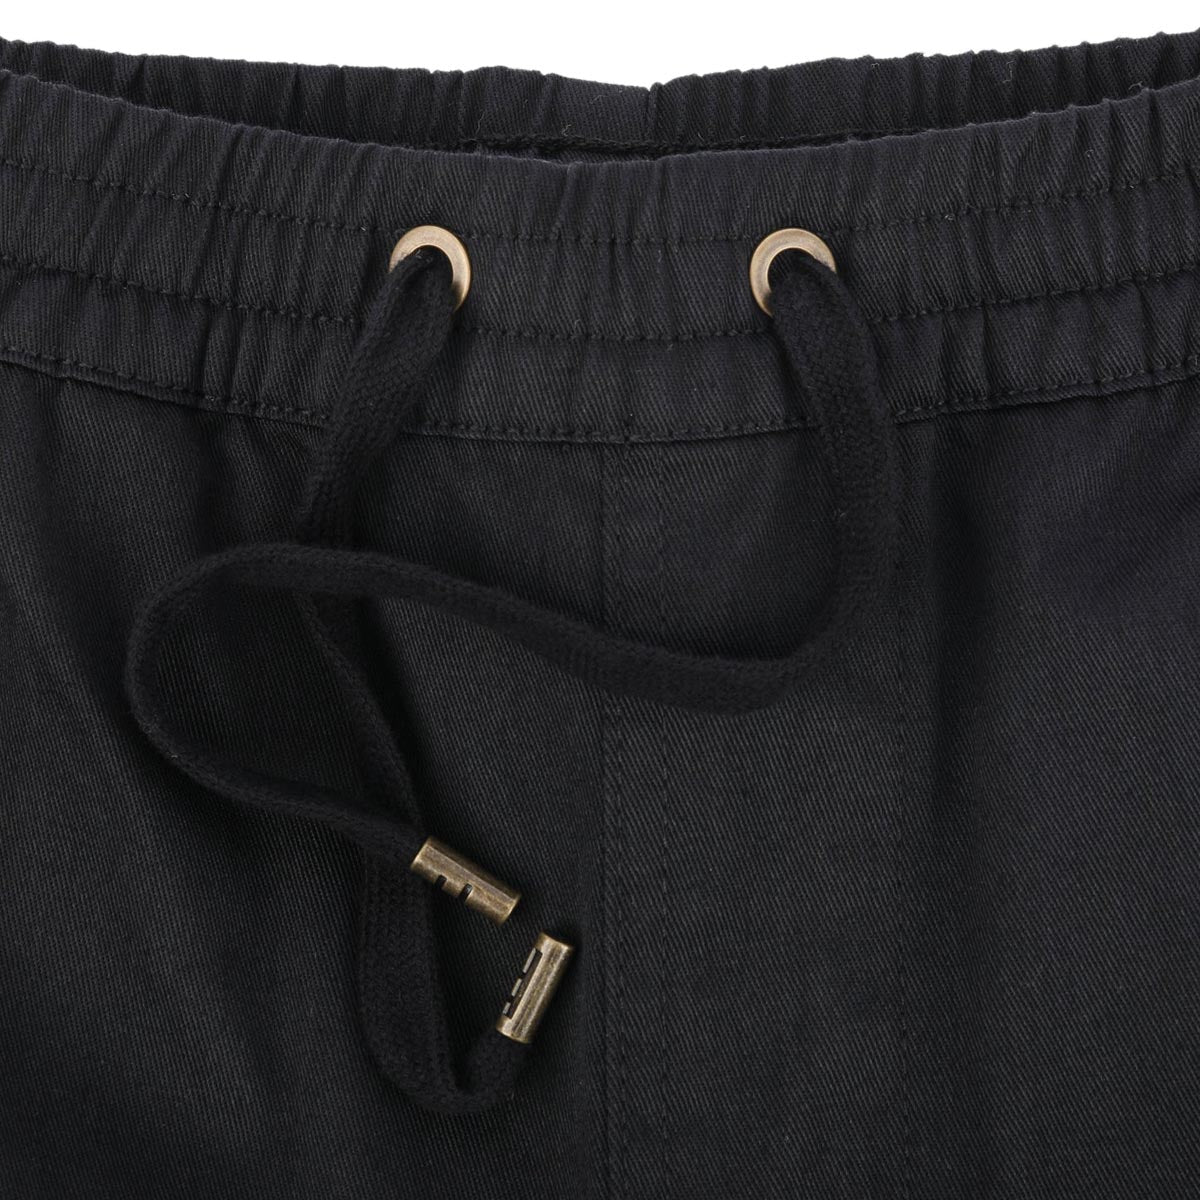 Former Prayer Cropped Pants - Black image 3